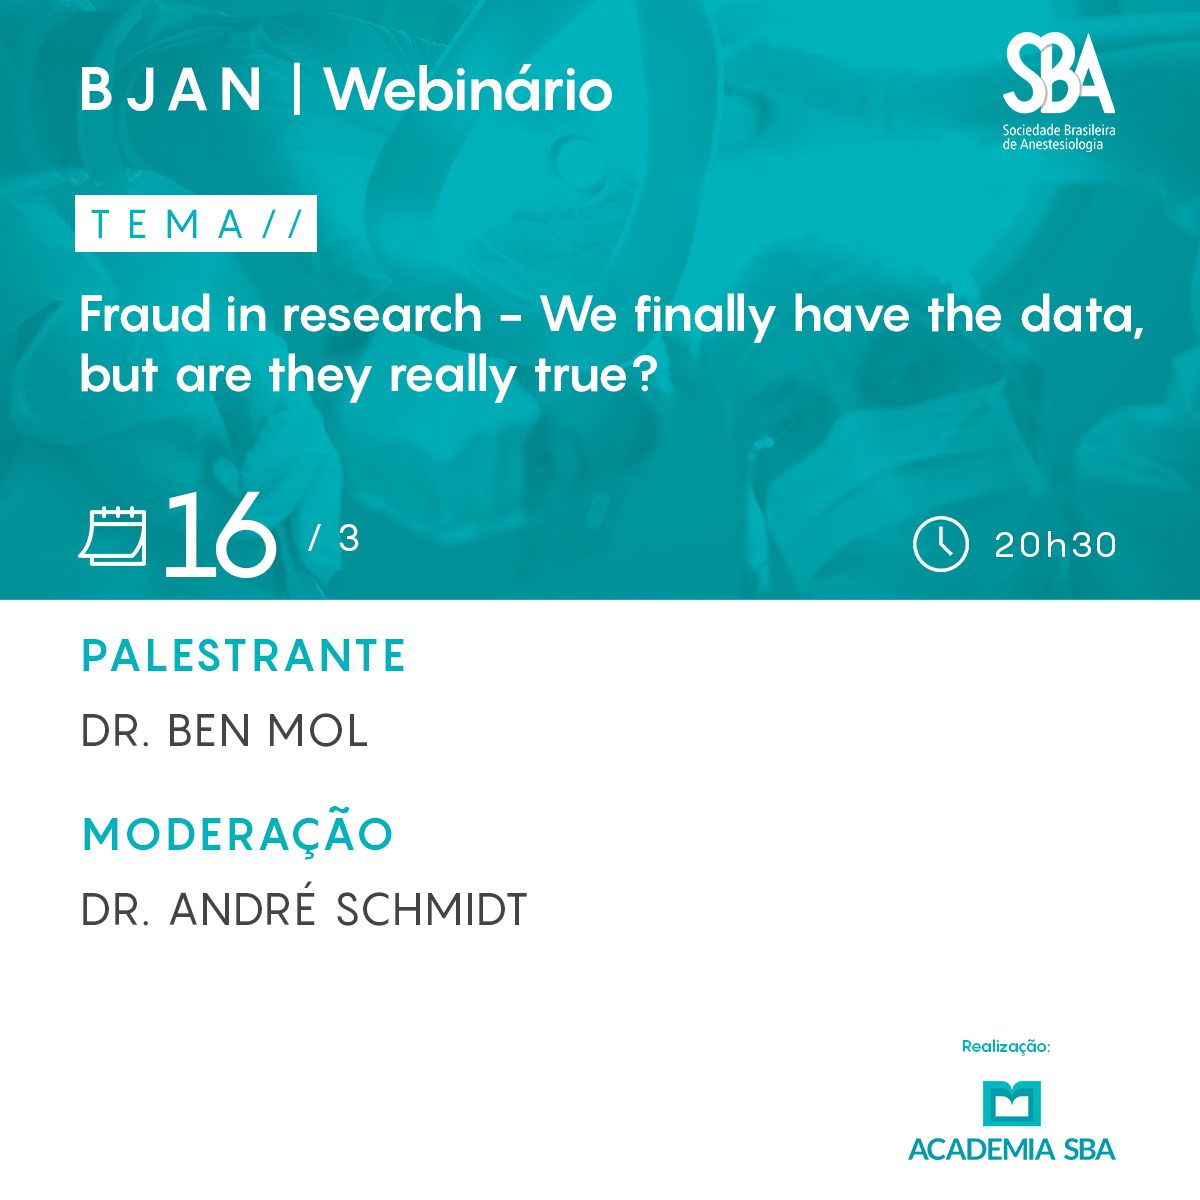 Webinário BJAN – We finally have the data, but are they really true?